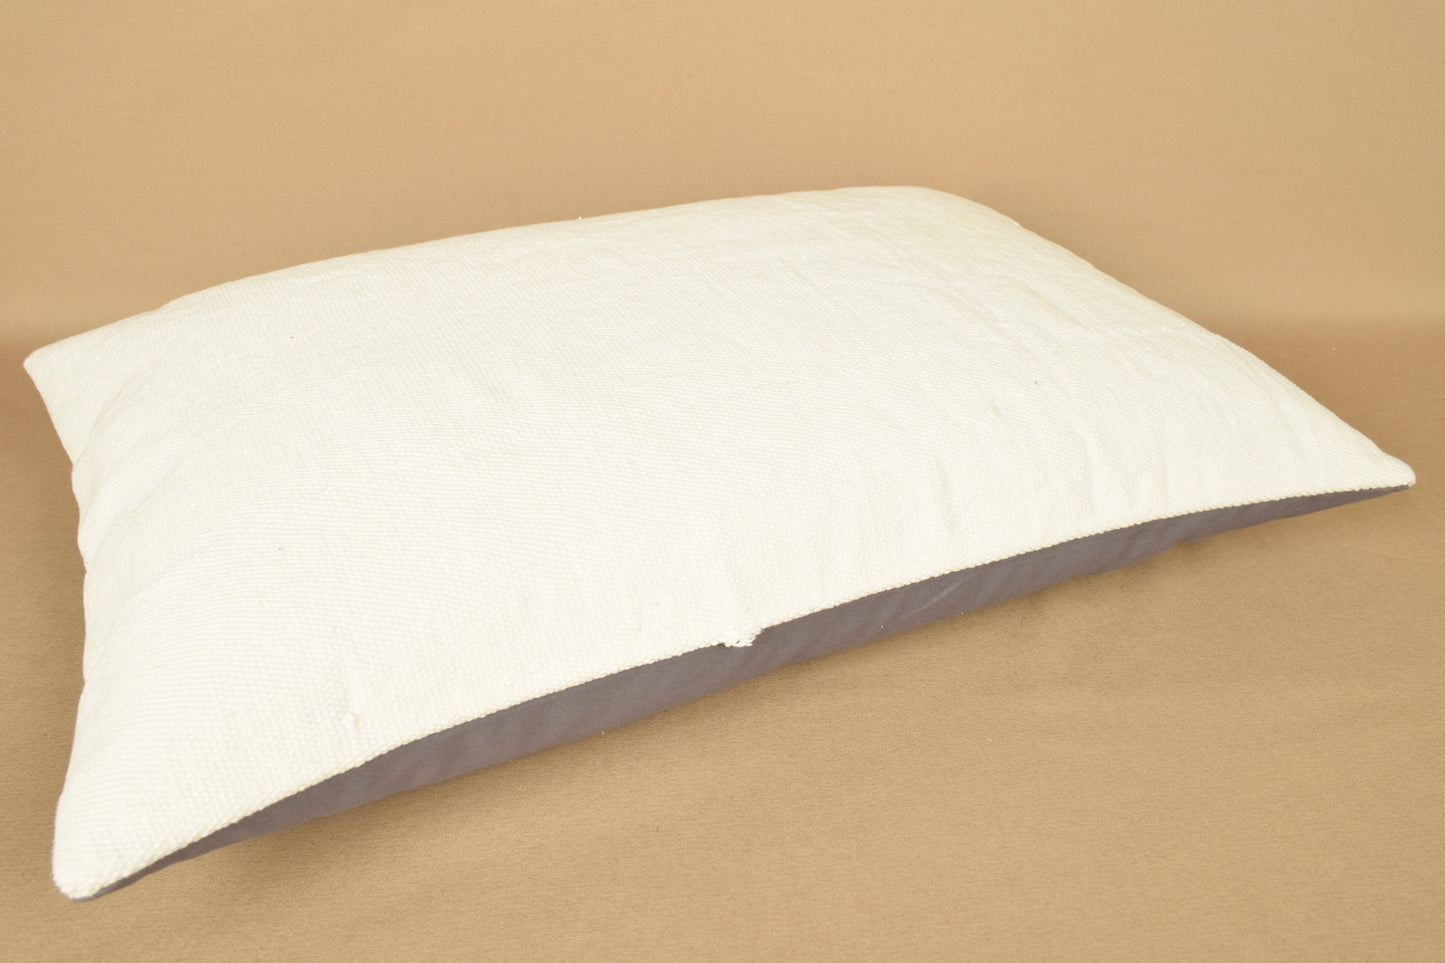 Turkish Kilim Pillow Cover 16x24 " 40x60 cm. E00722